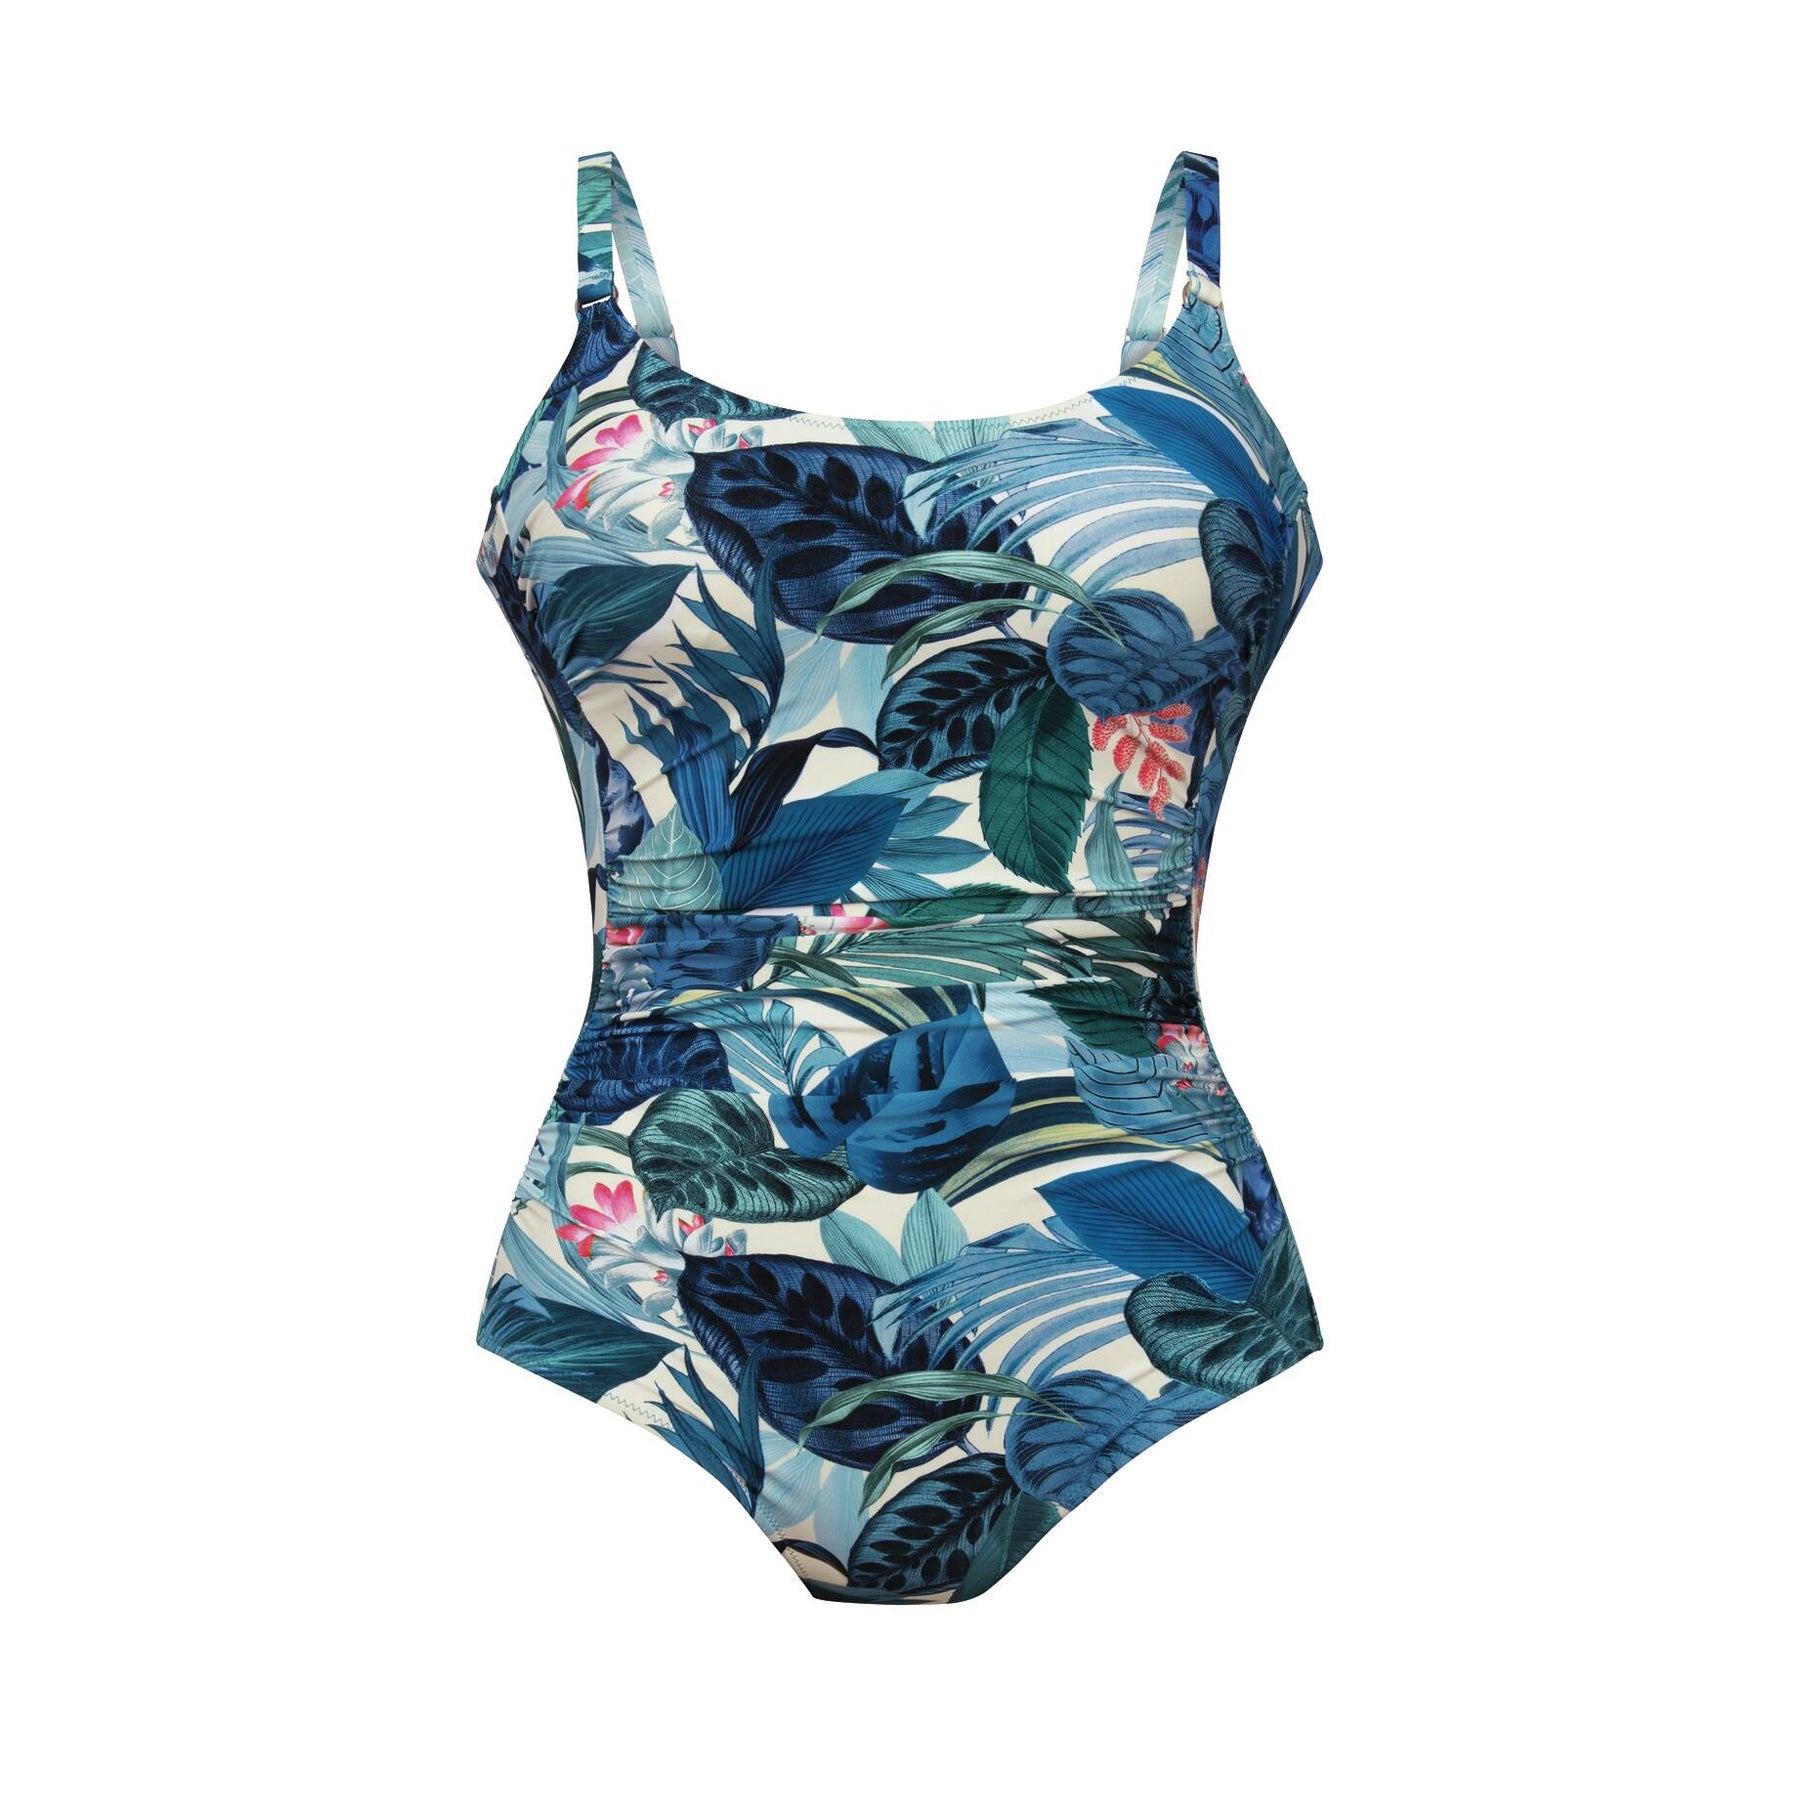  Anita Care Womens Dirban Swimsuit, 10D, French Blue